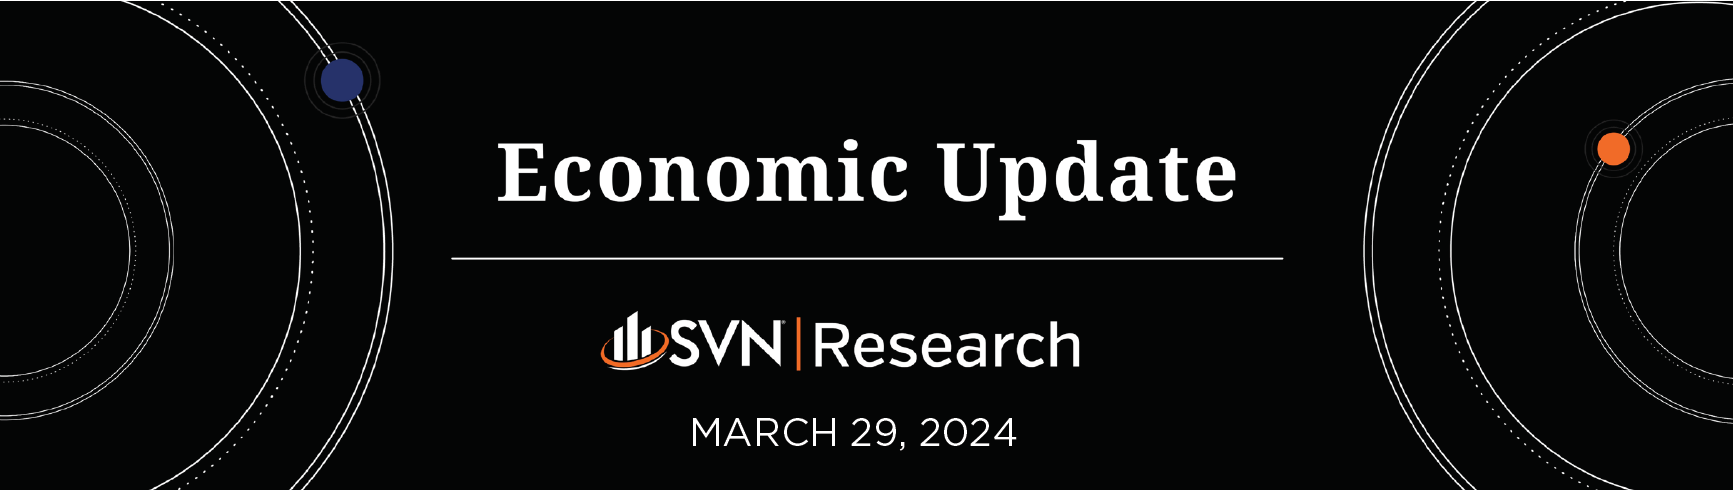 SVN | Research Economic Update 3.29.2024